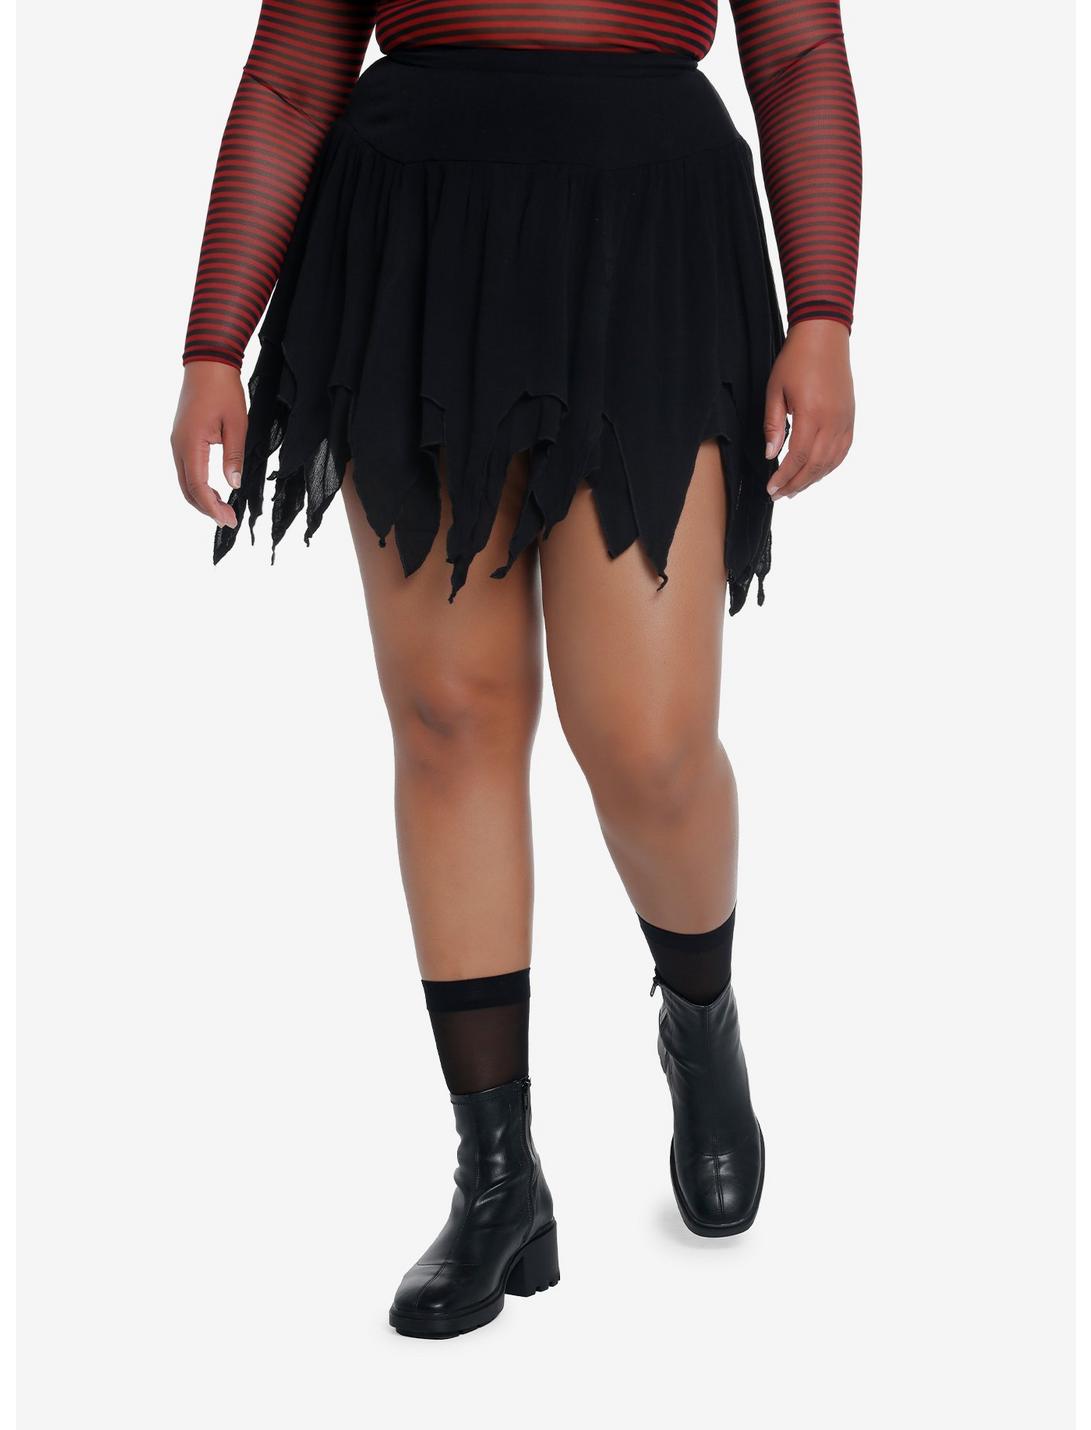 Cosmic Aura Black Hanky Hem Skirt Plus Size, BLACK, hi-res